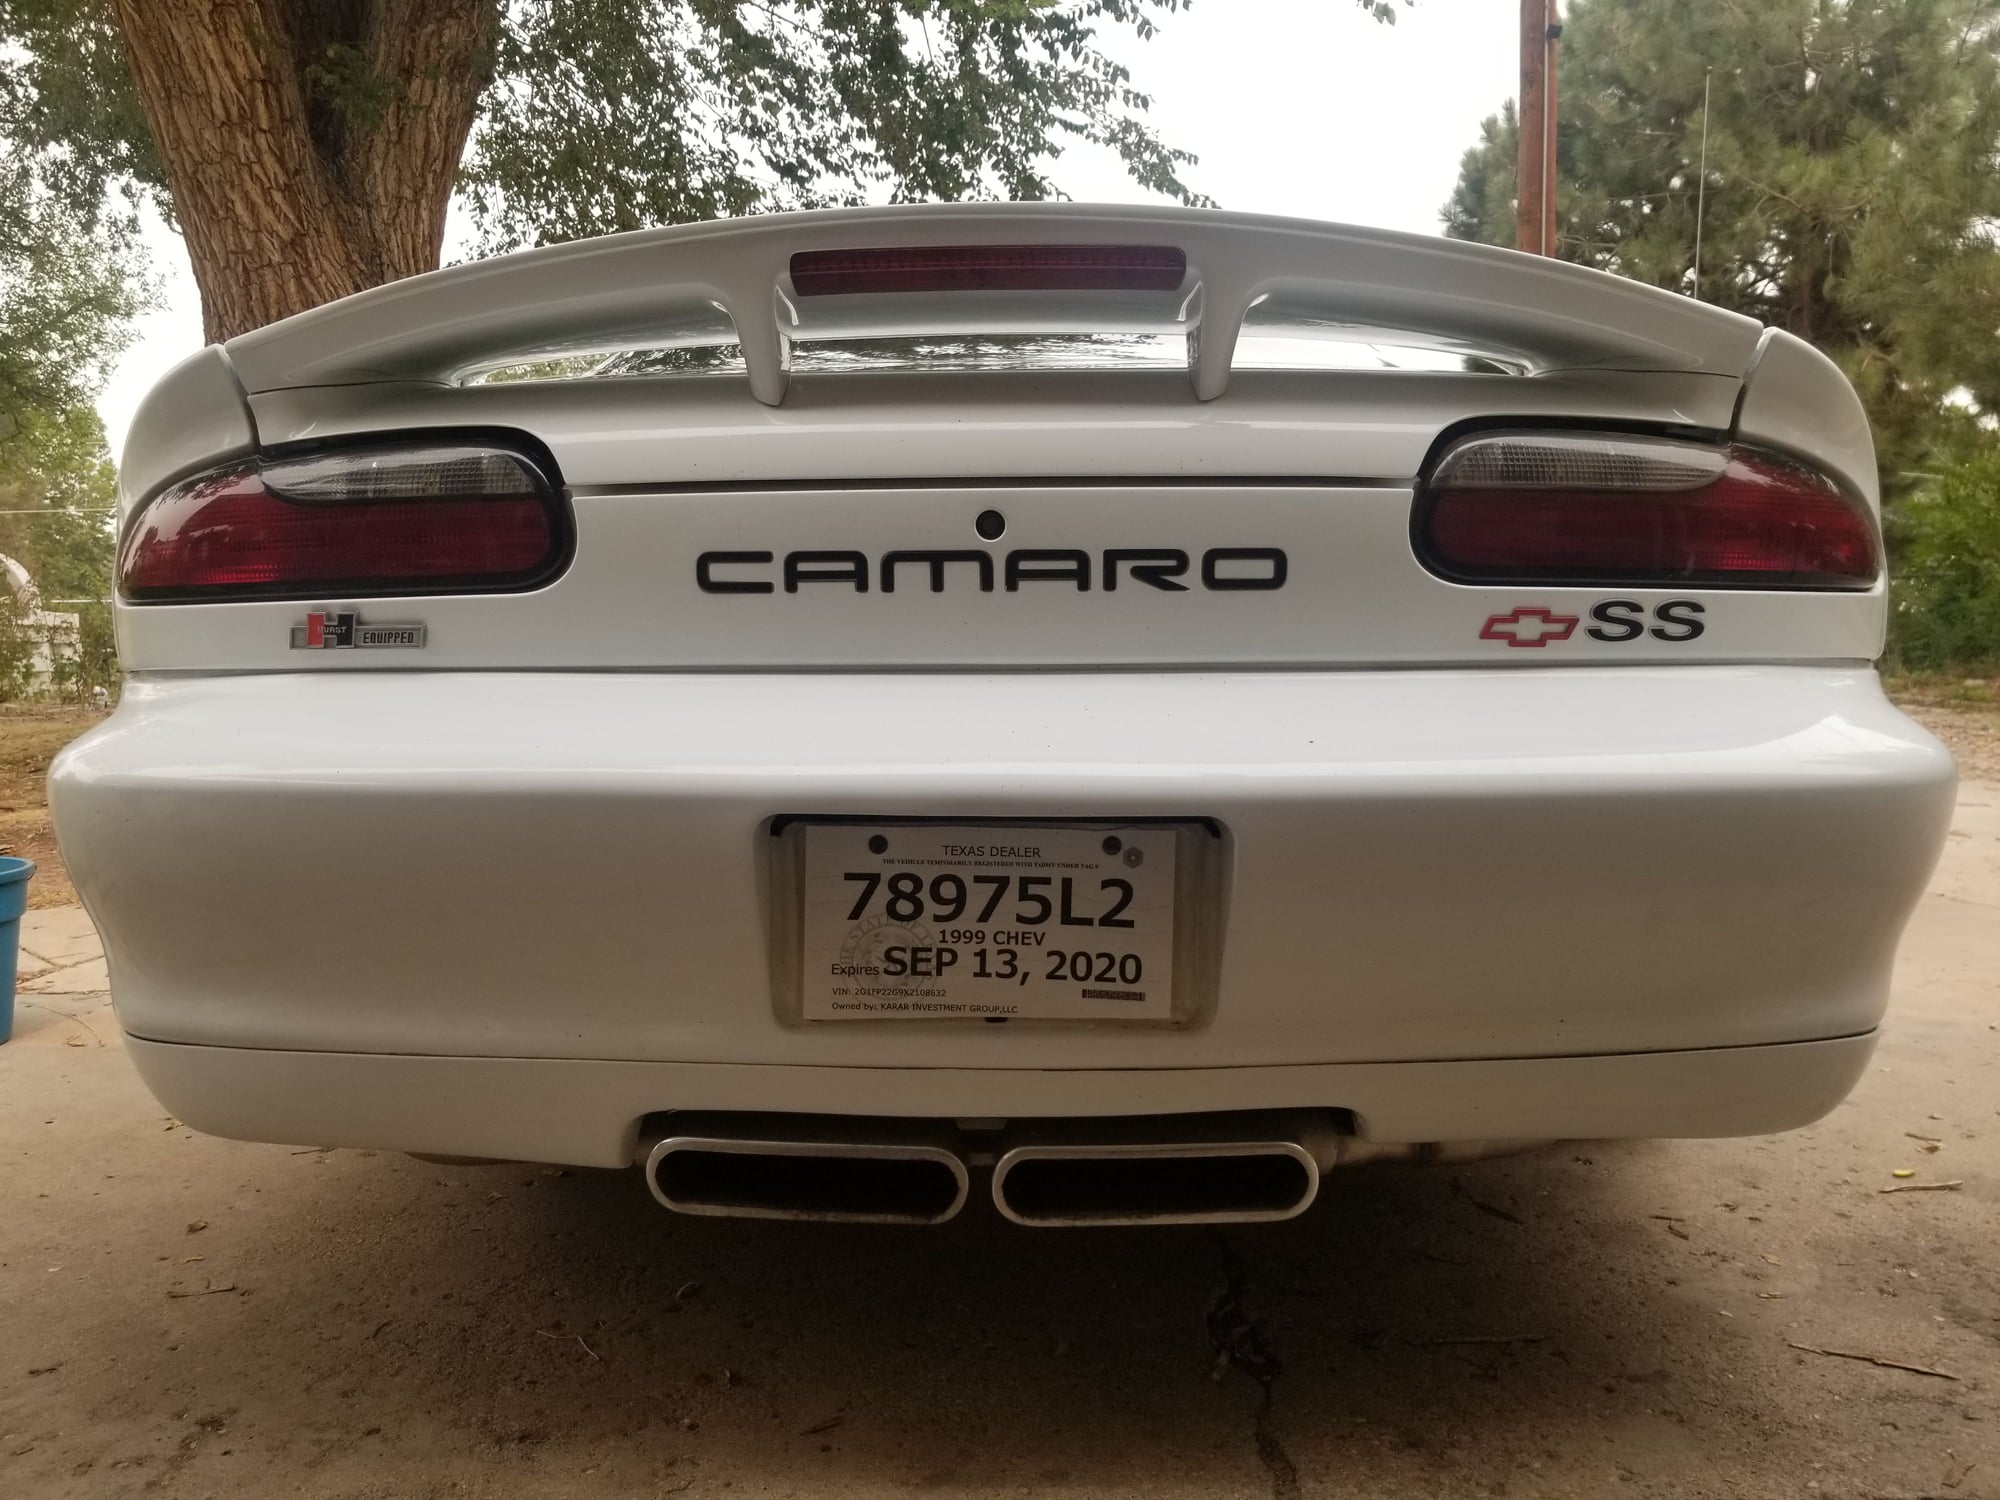 1999 Chevrolet Camaro - 99 Camaro 1sz - Used - VIN 2g1fp22g9x2108632 - Manual - Pueblo, CO 81004, United States